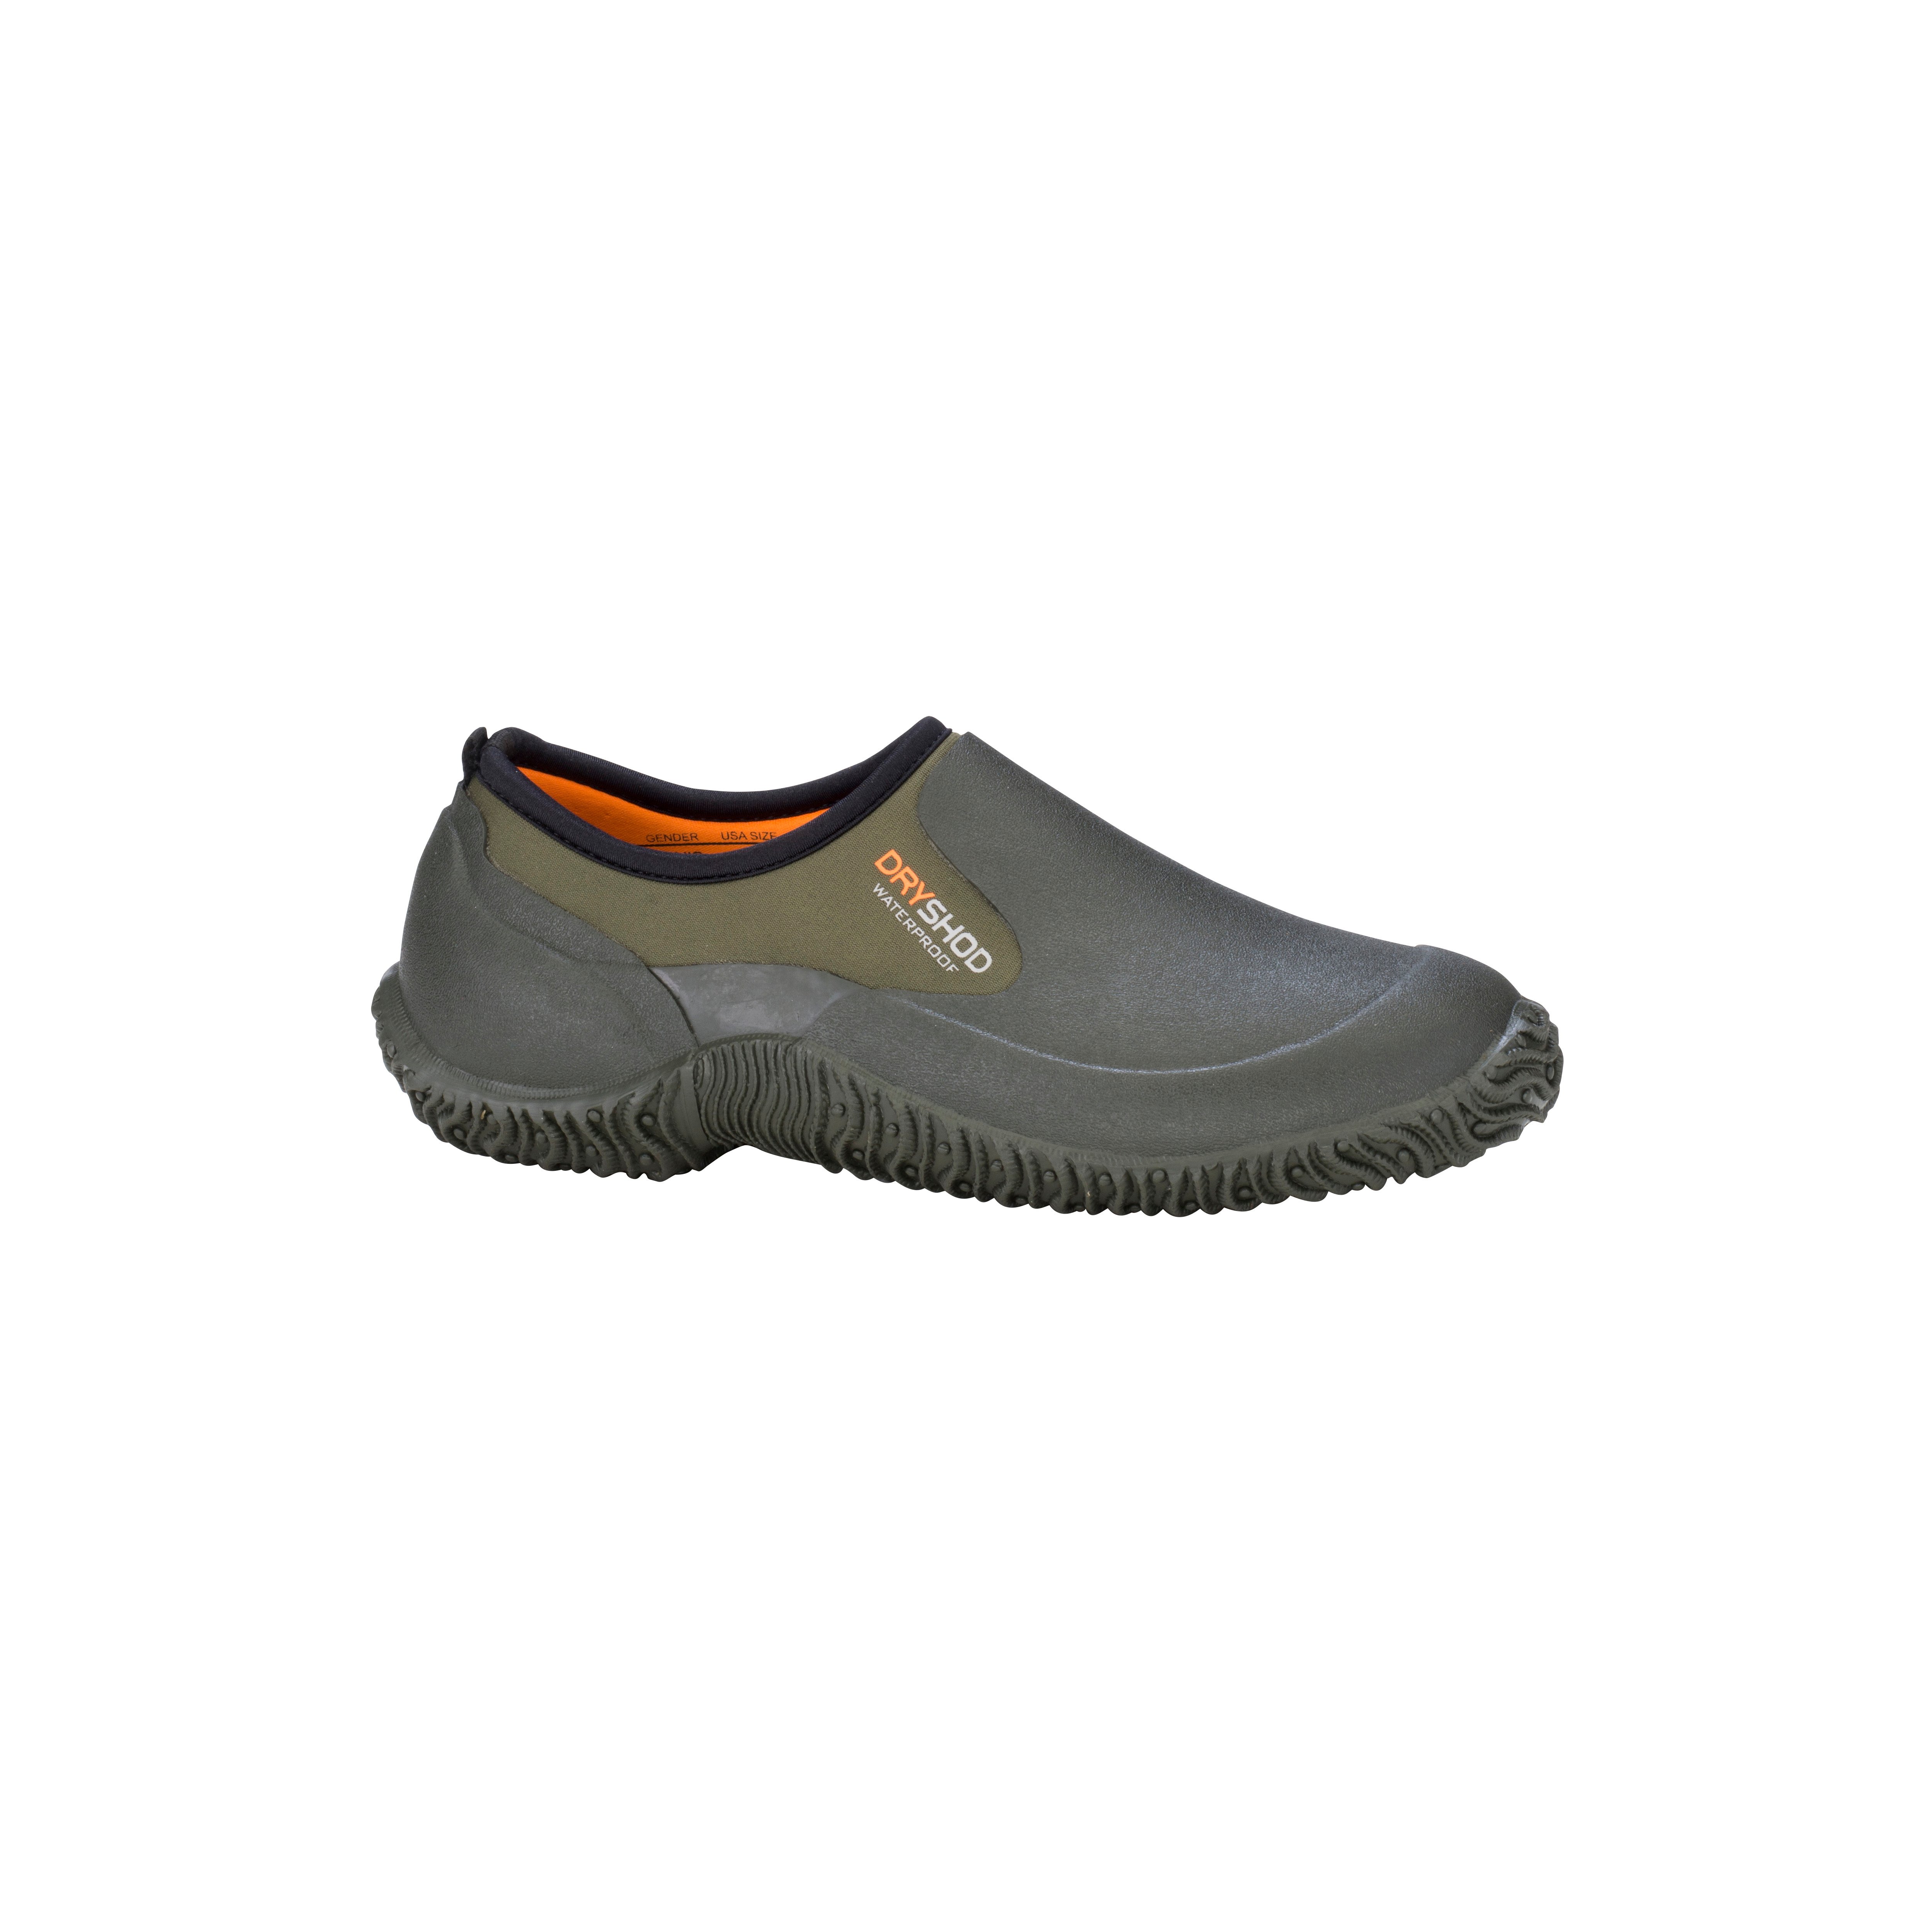 Legend Camp Shoe - Dryshod Waterproof Boots